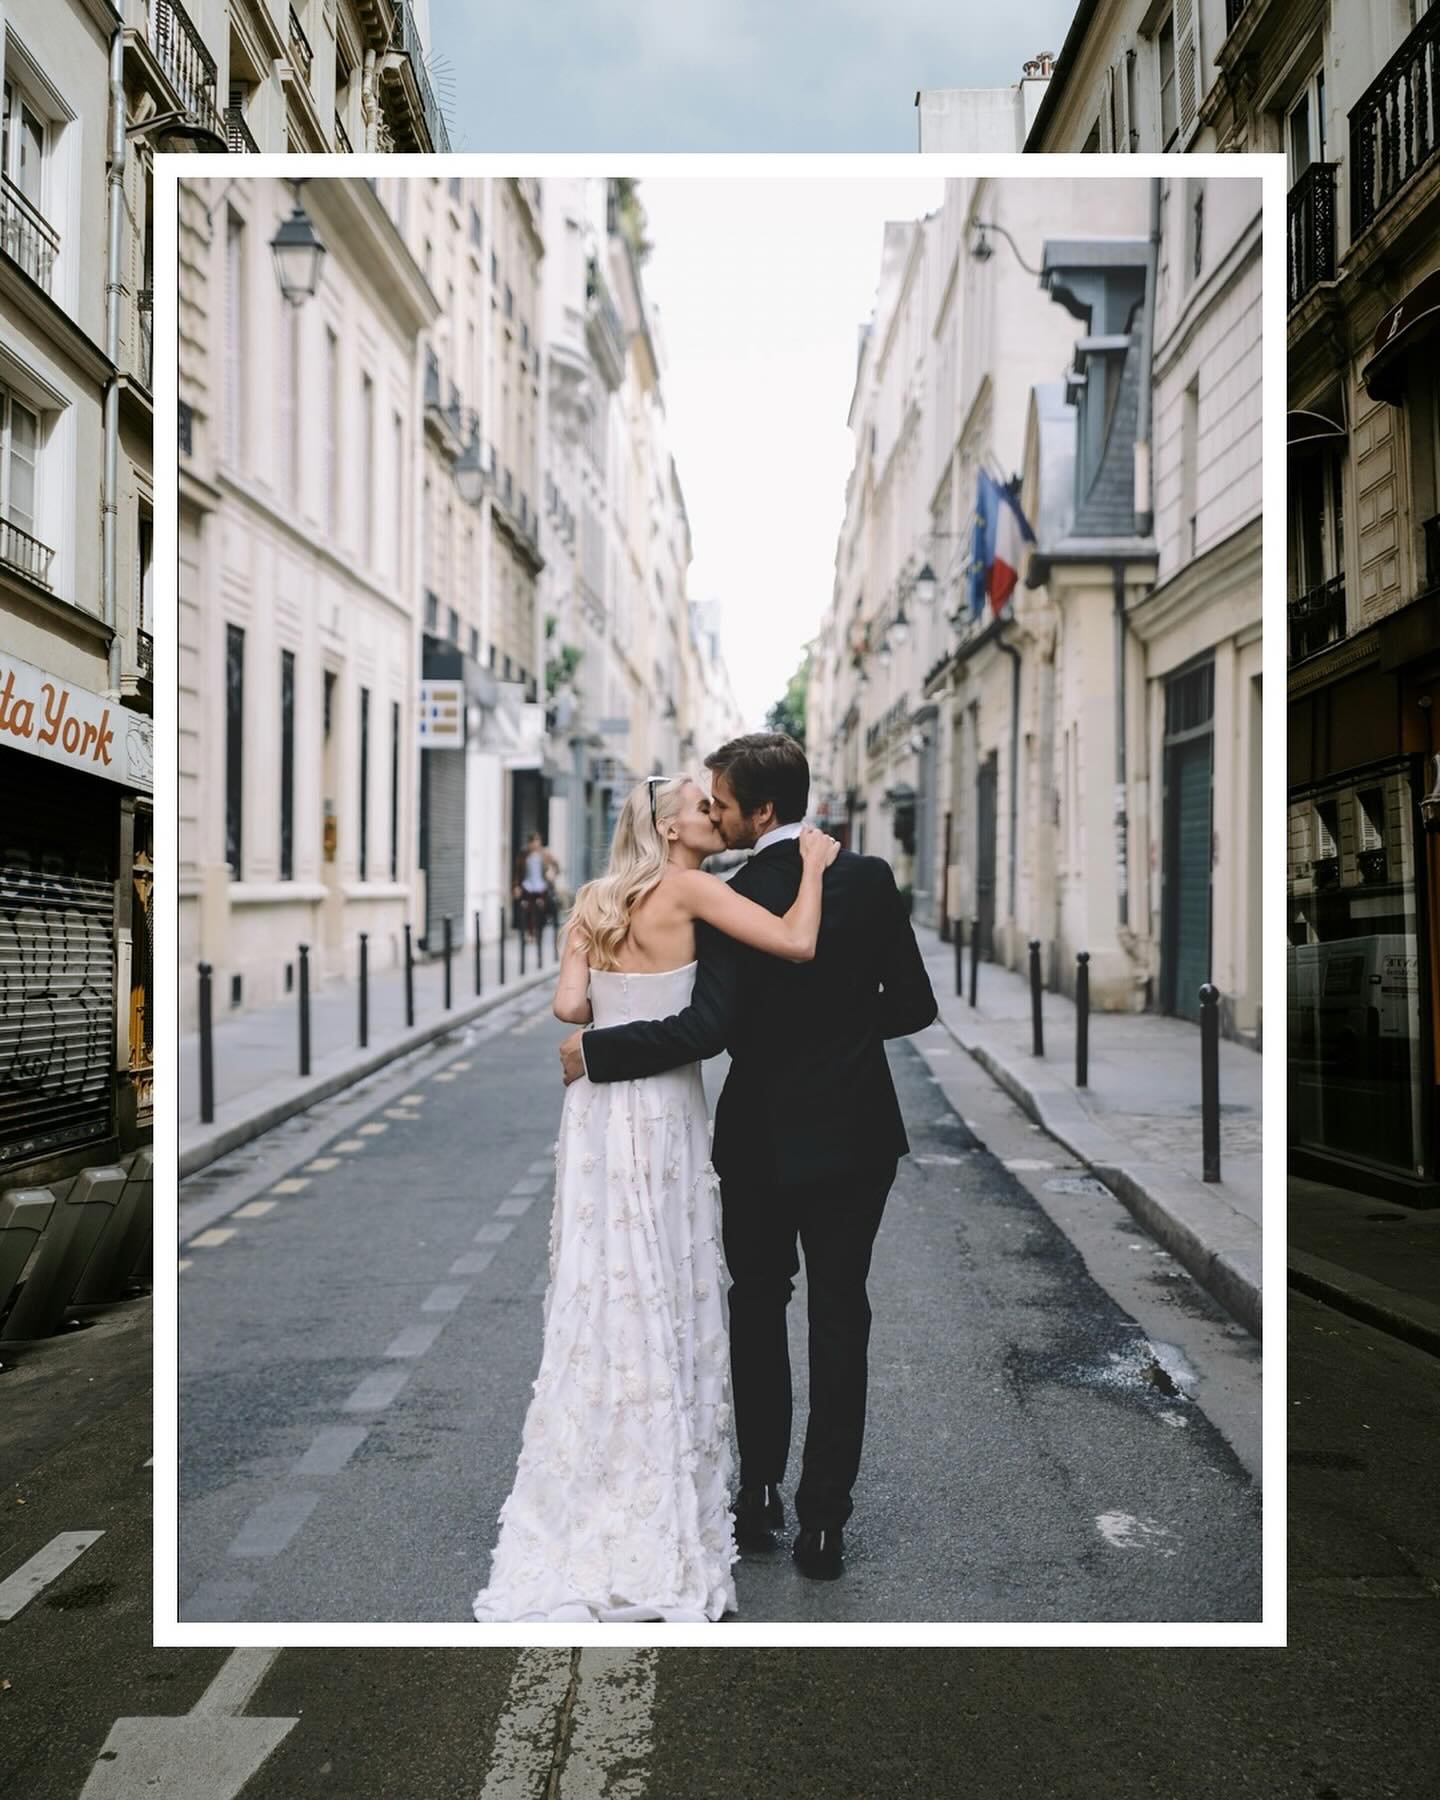 Friday Night In Paris
.
.
.
.
#robertcarlonewyork #nyc #paris #france #wedding #nycweddingphotographer #nycweddingphotography #nycbride #love #streets #kiss #champagne #cheese #wine #french #hot #luxury #pariswedding #fun #cheers